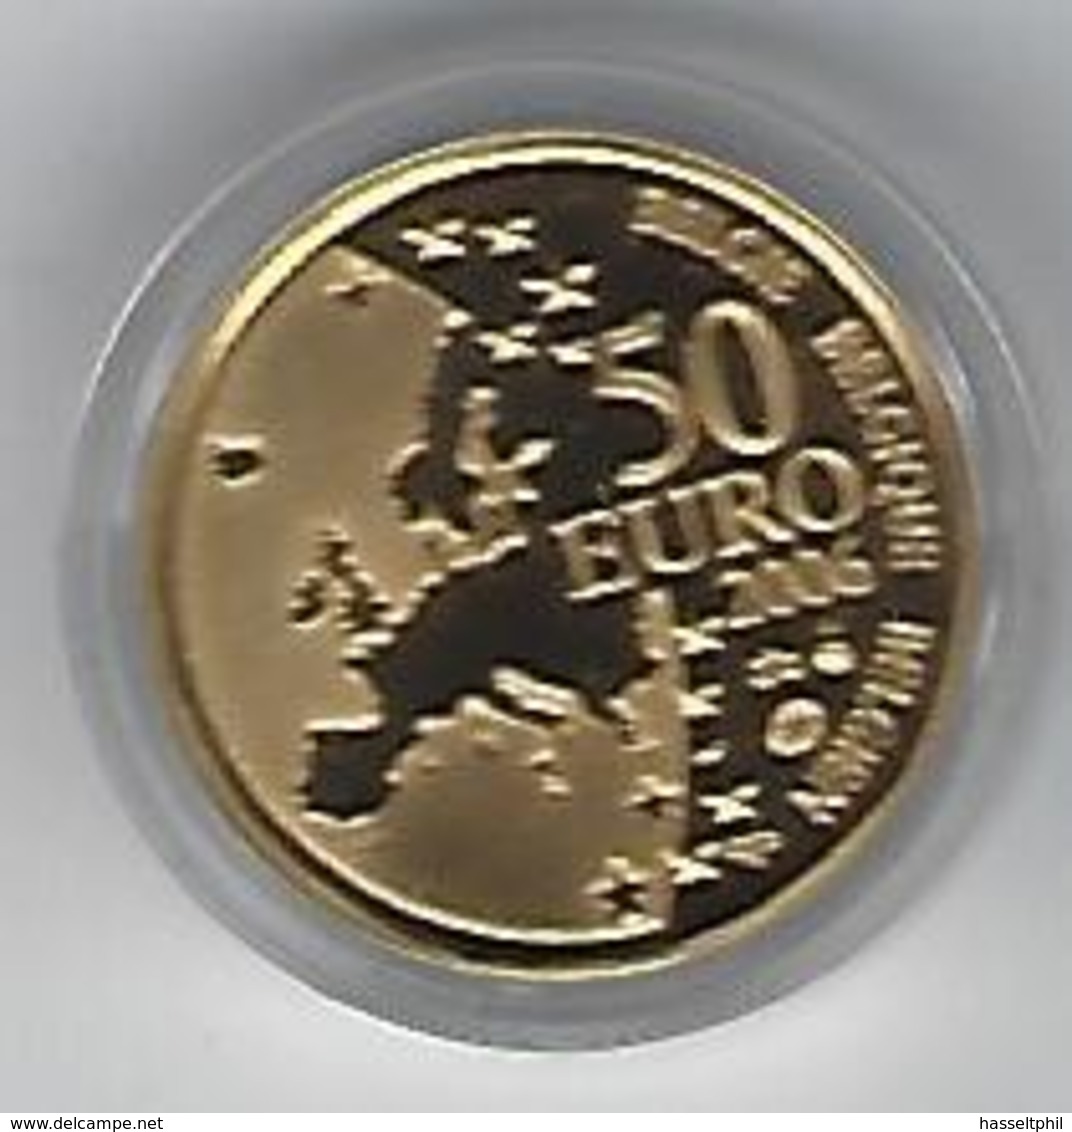 BELGIE - BELGIQUE Justus Lipsius - 2006 - 50 Euro Gold In Box With Certificate - Belgique